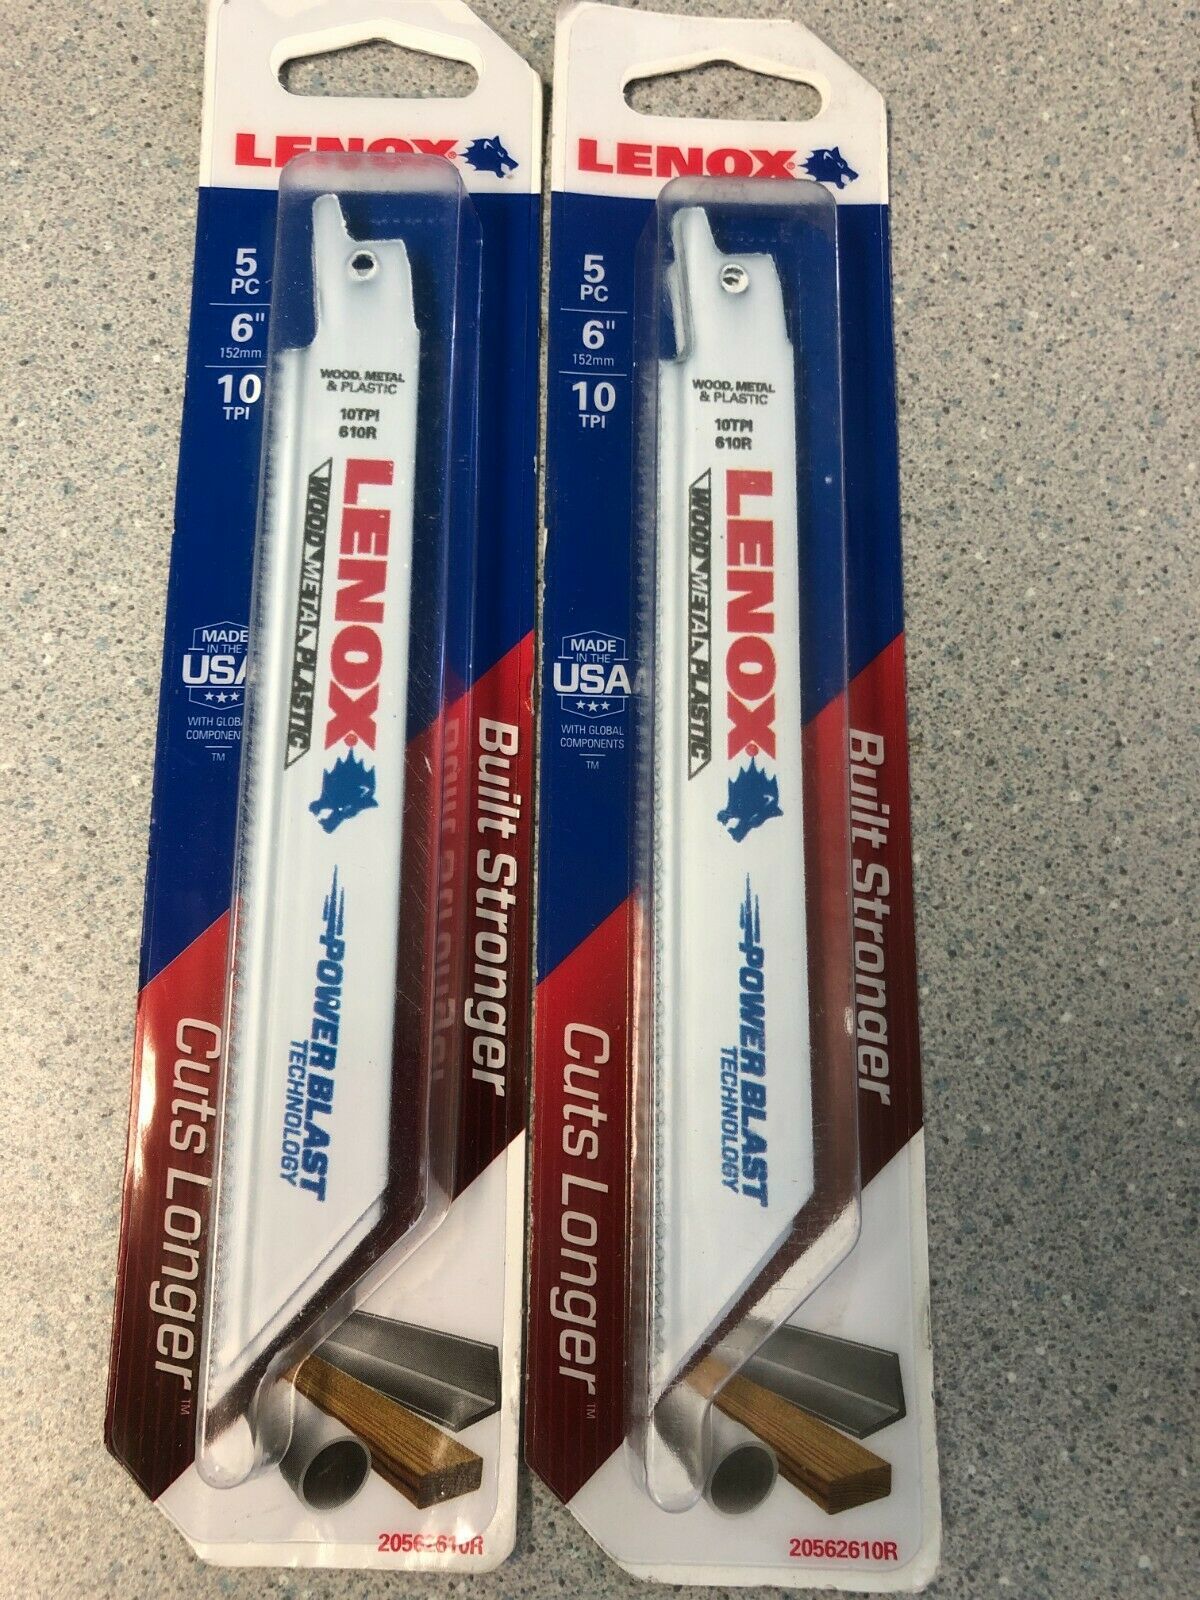 2X Lenox 20562-610R 6" x 10T Wood & Metal Reciprocating Saw Blades 5 Pack USA - $18.80